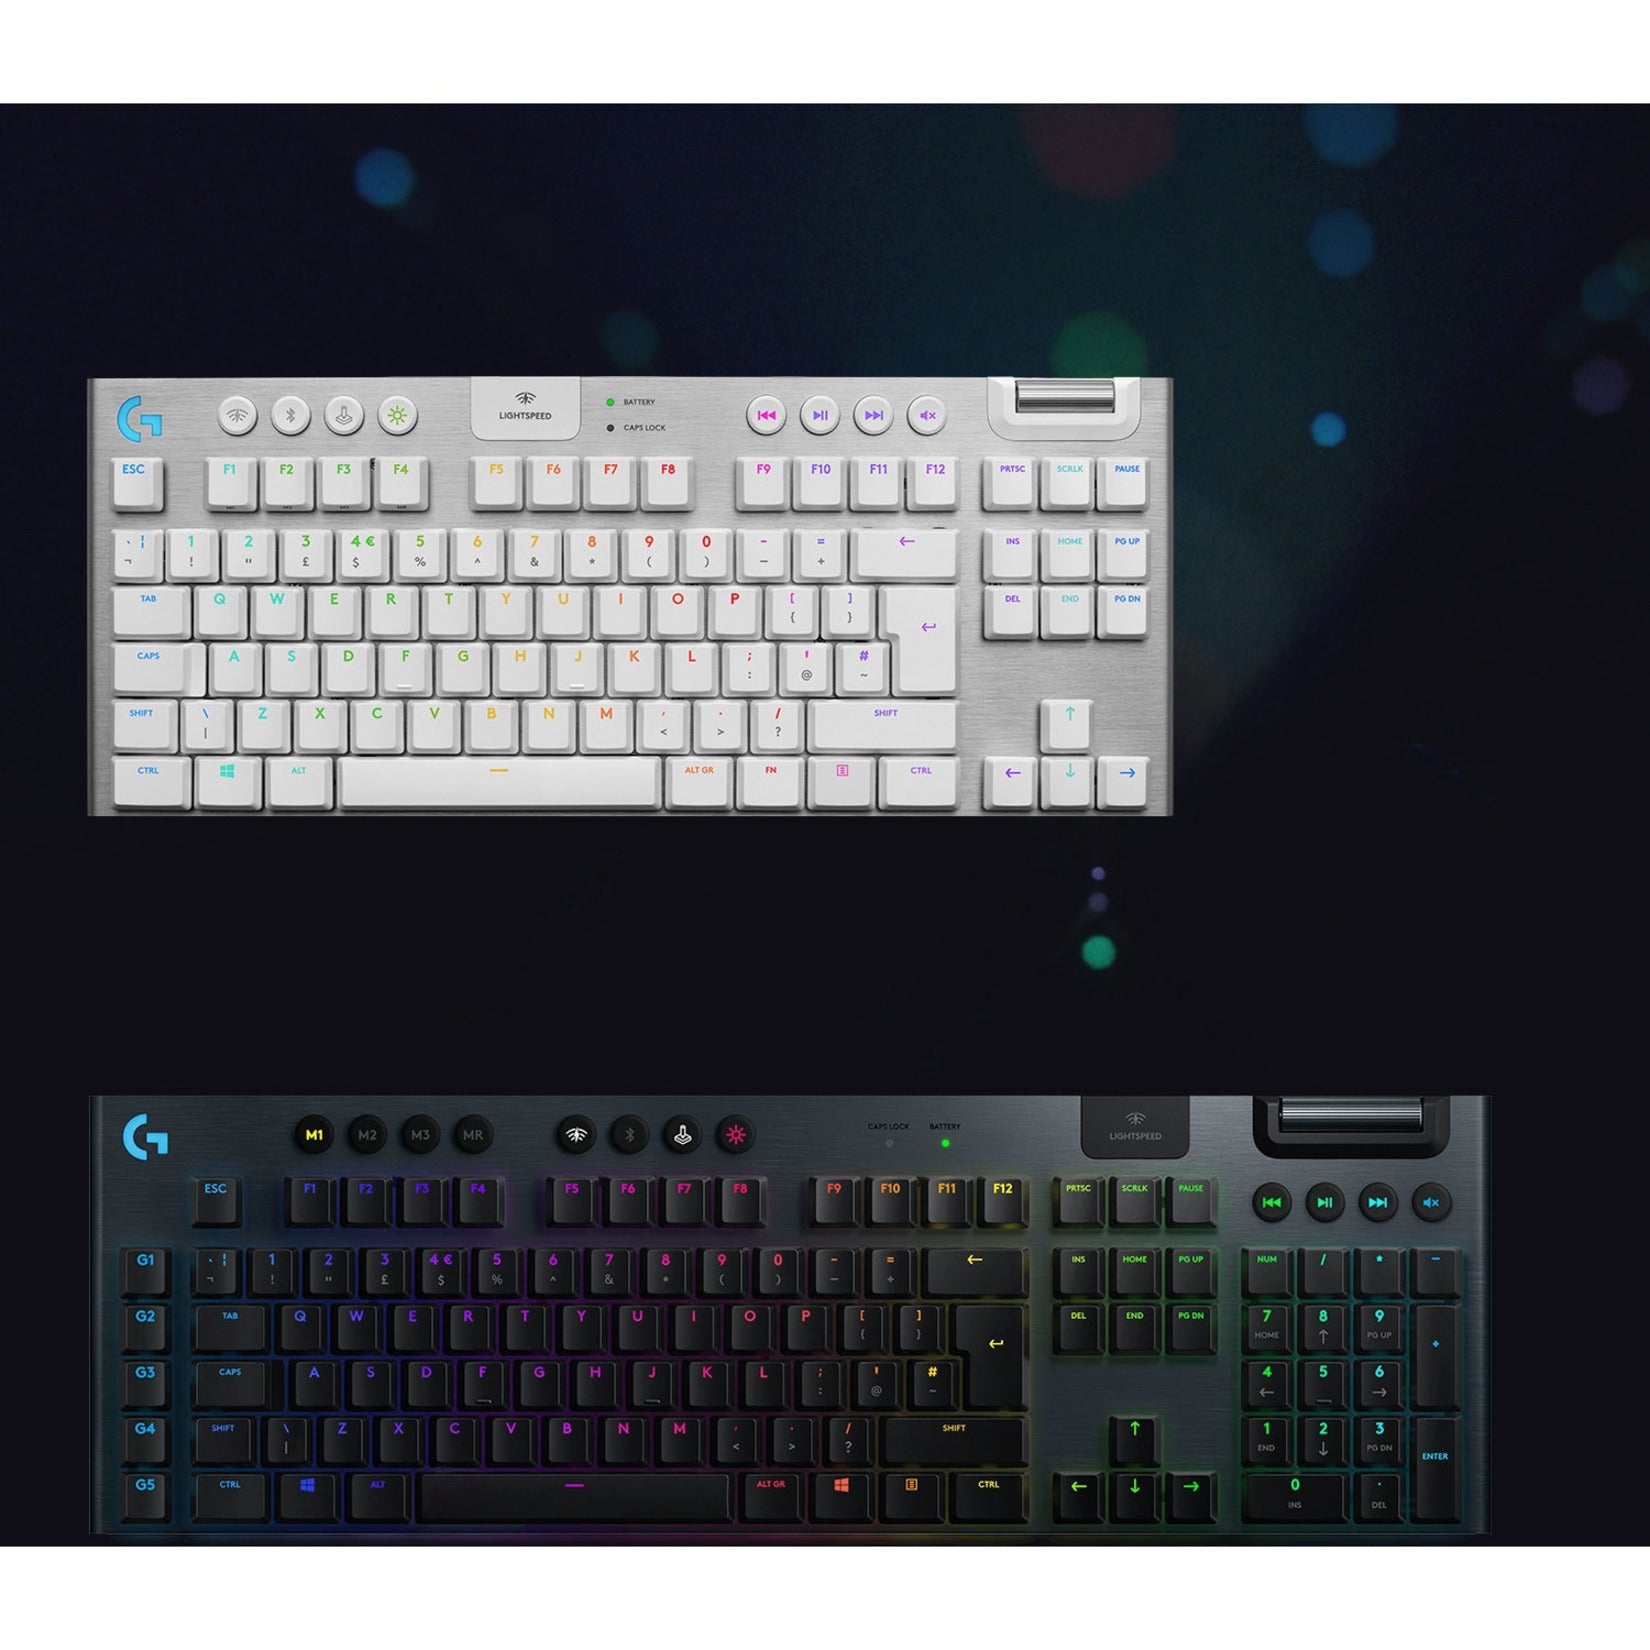 Logitech 920-009660 G915 TKL Tenkeyless Lightspeed Wireless RGB Mechanical Gaming Keyboard, Compact Keyboard with Low-profile Keys, Customizable Backlighting